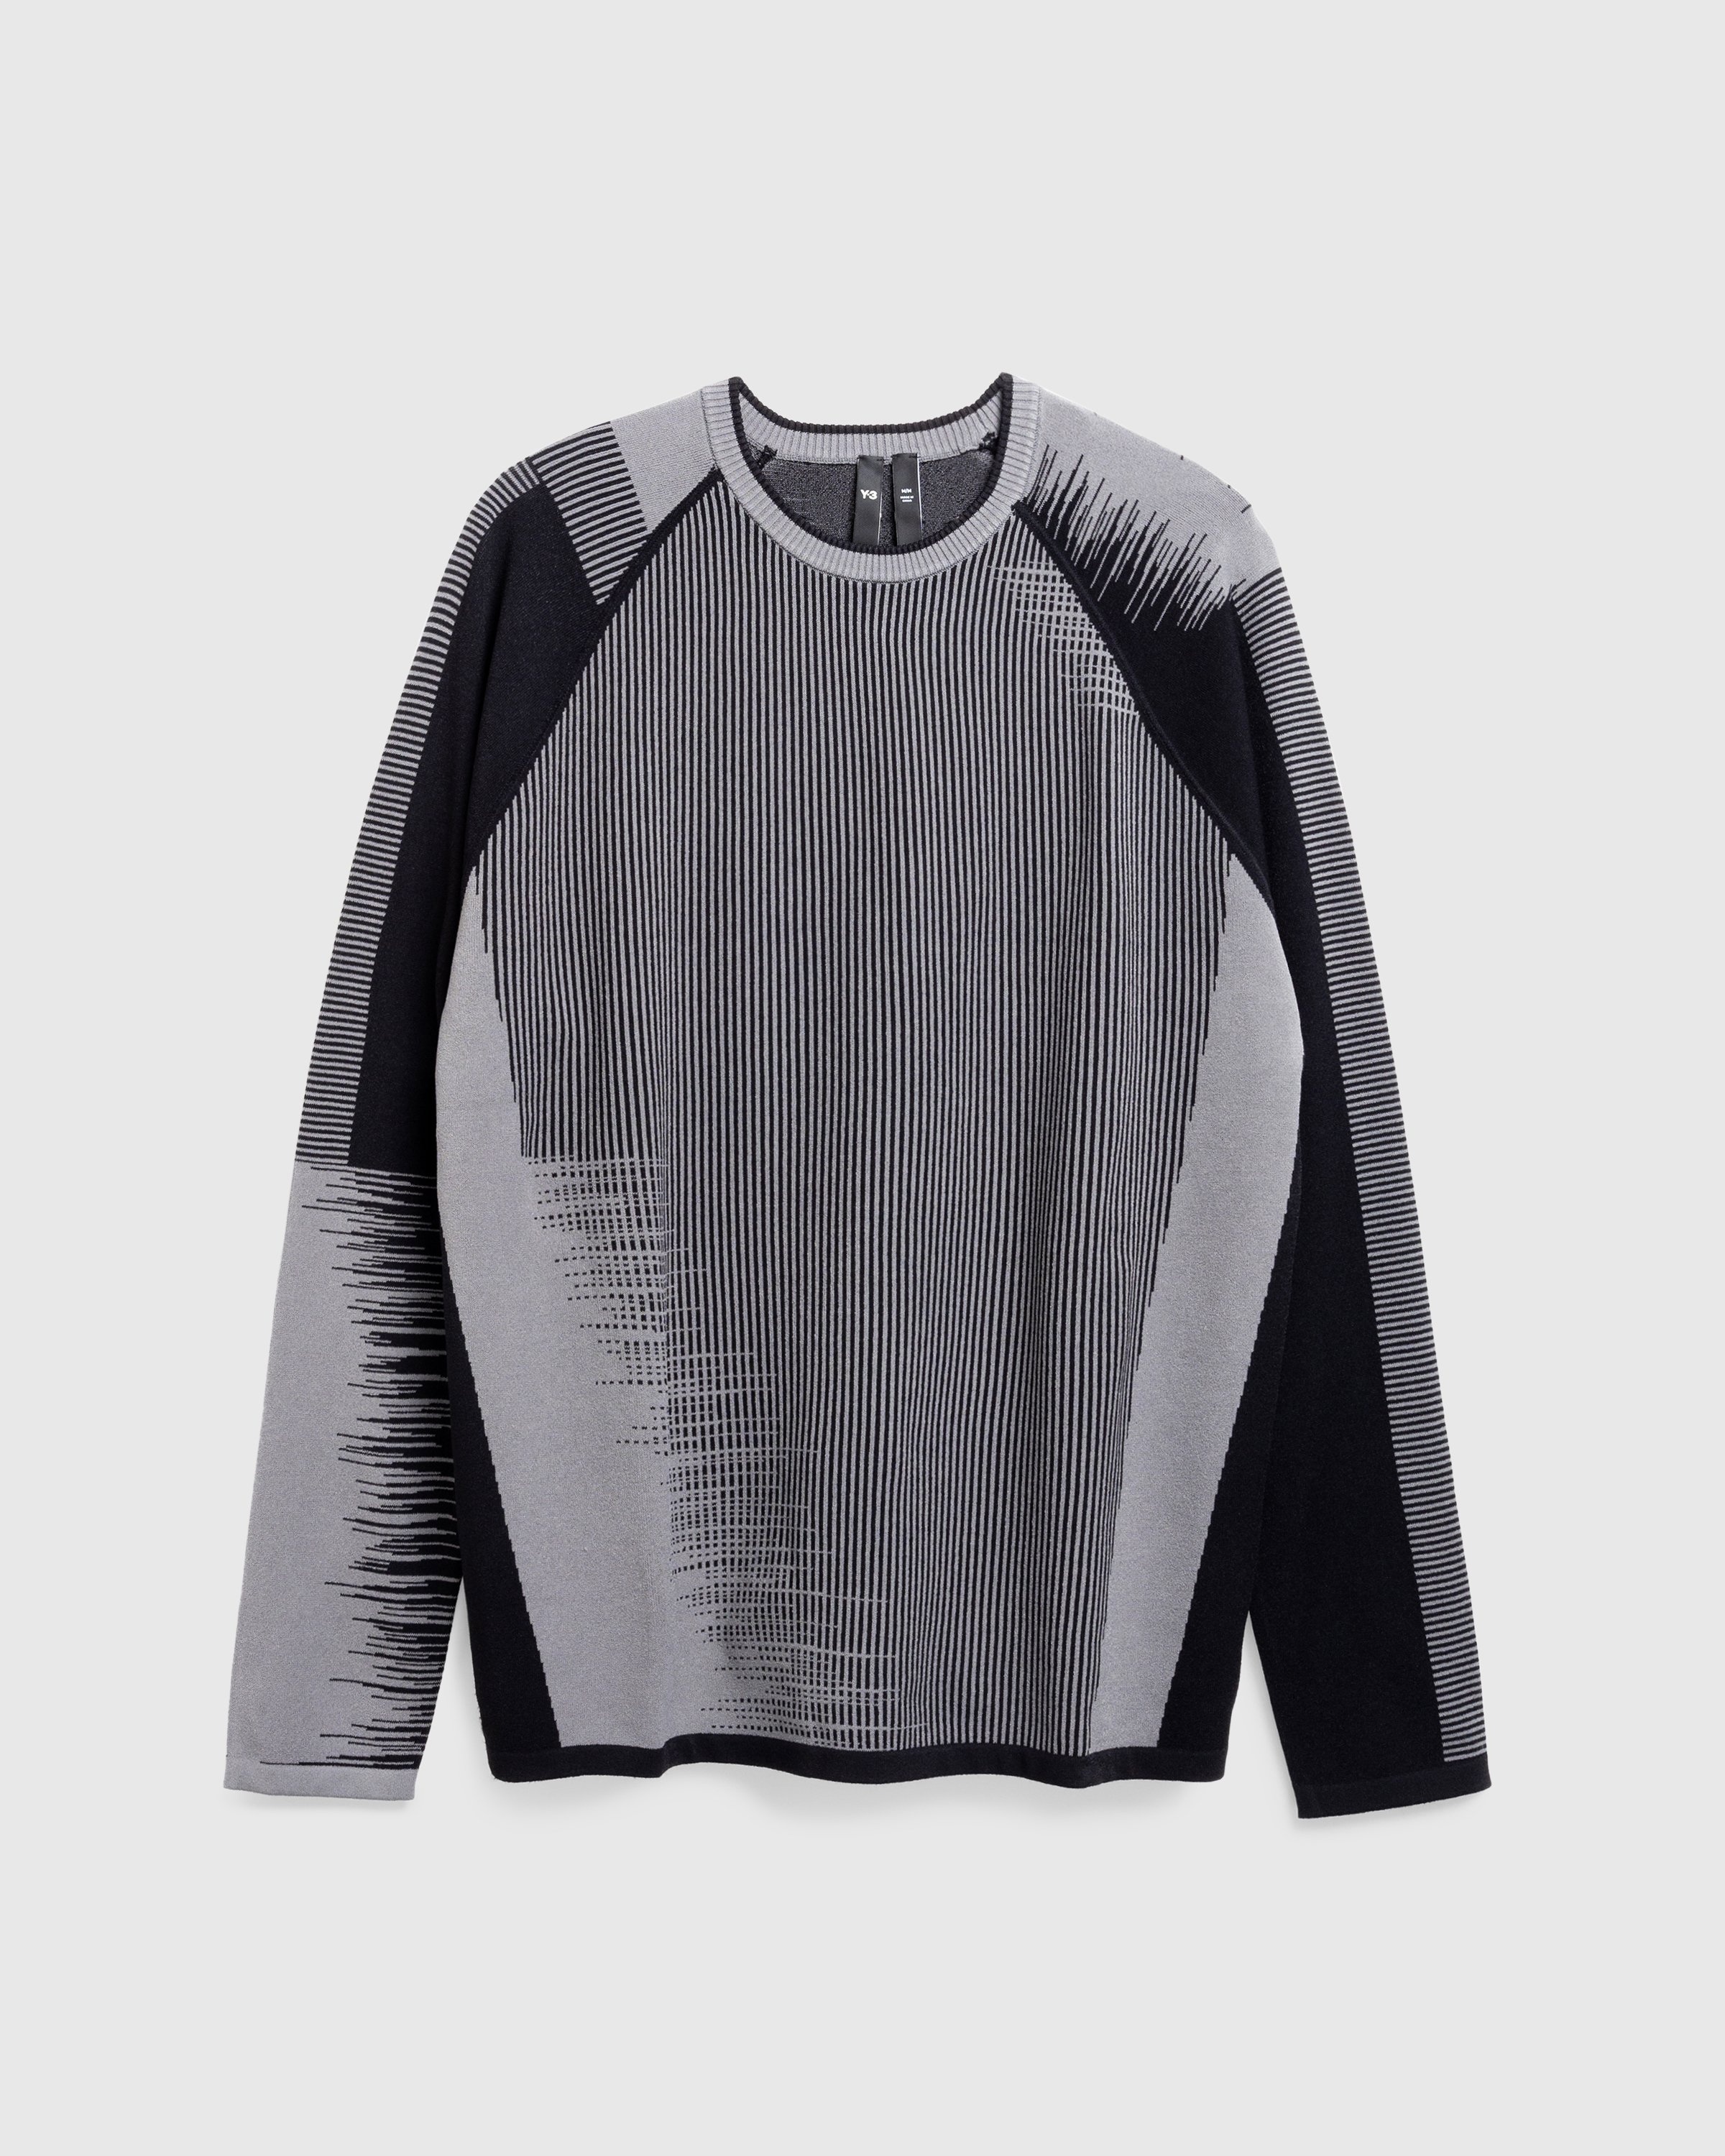 Y-3 – Logo Knit Sweater Black/Gray | Highsnobiety Shop